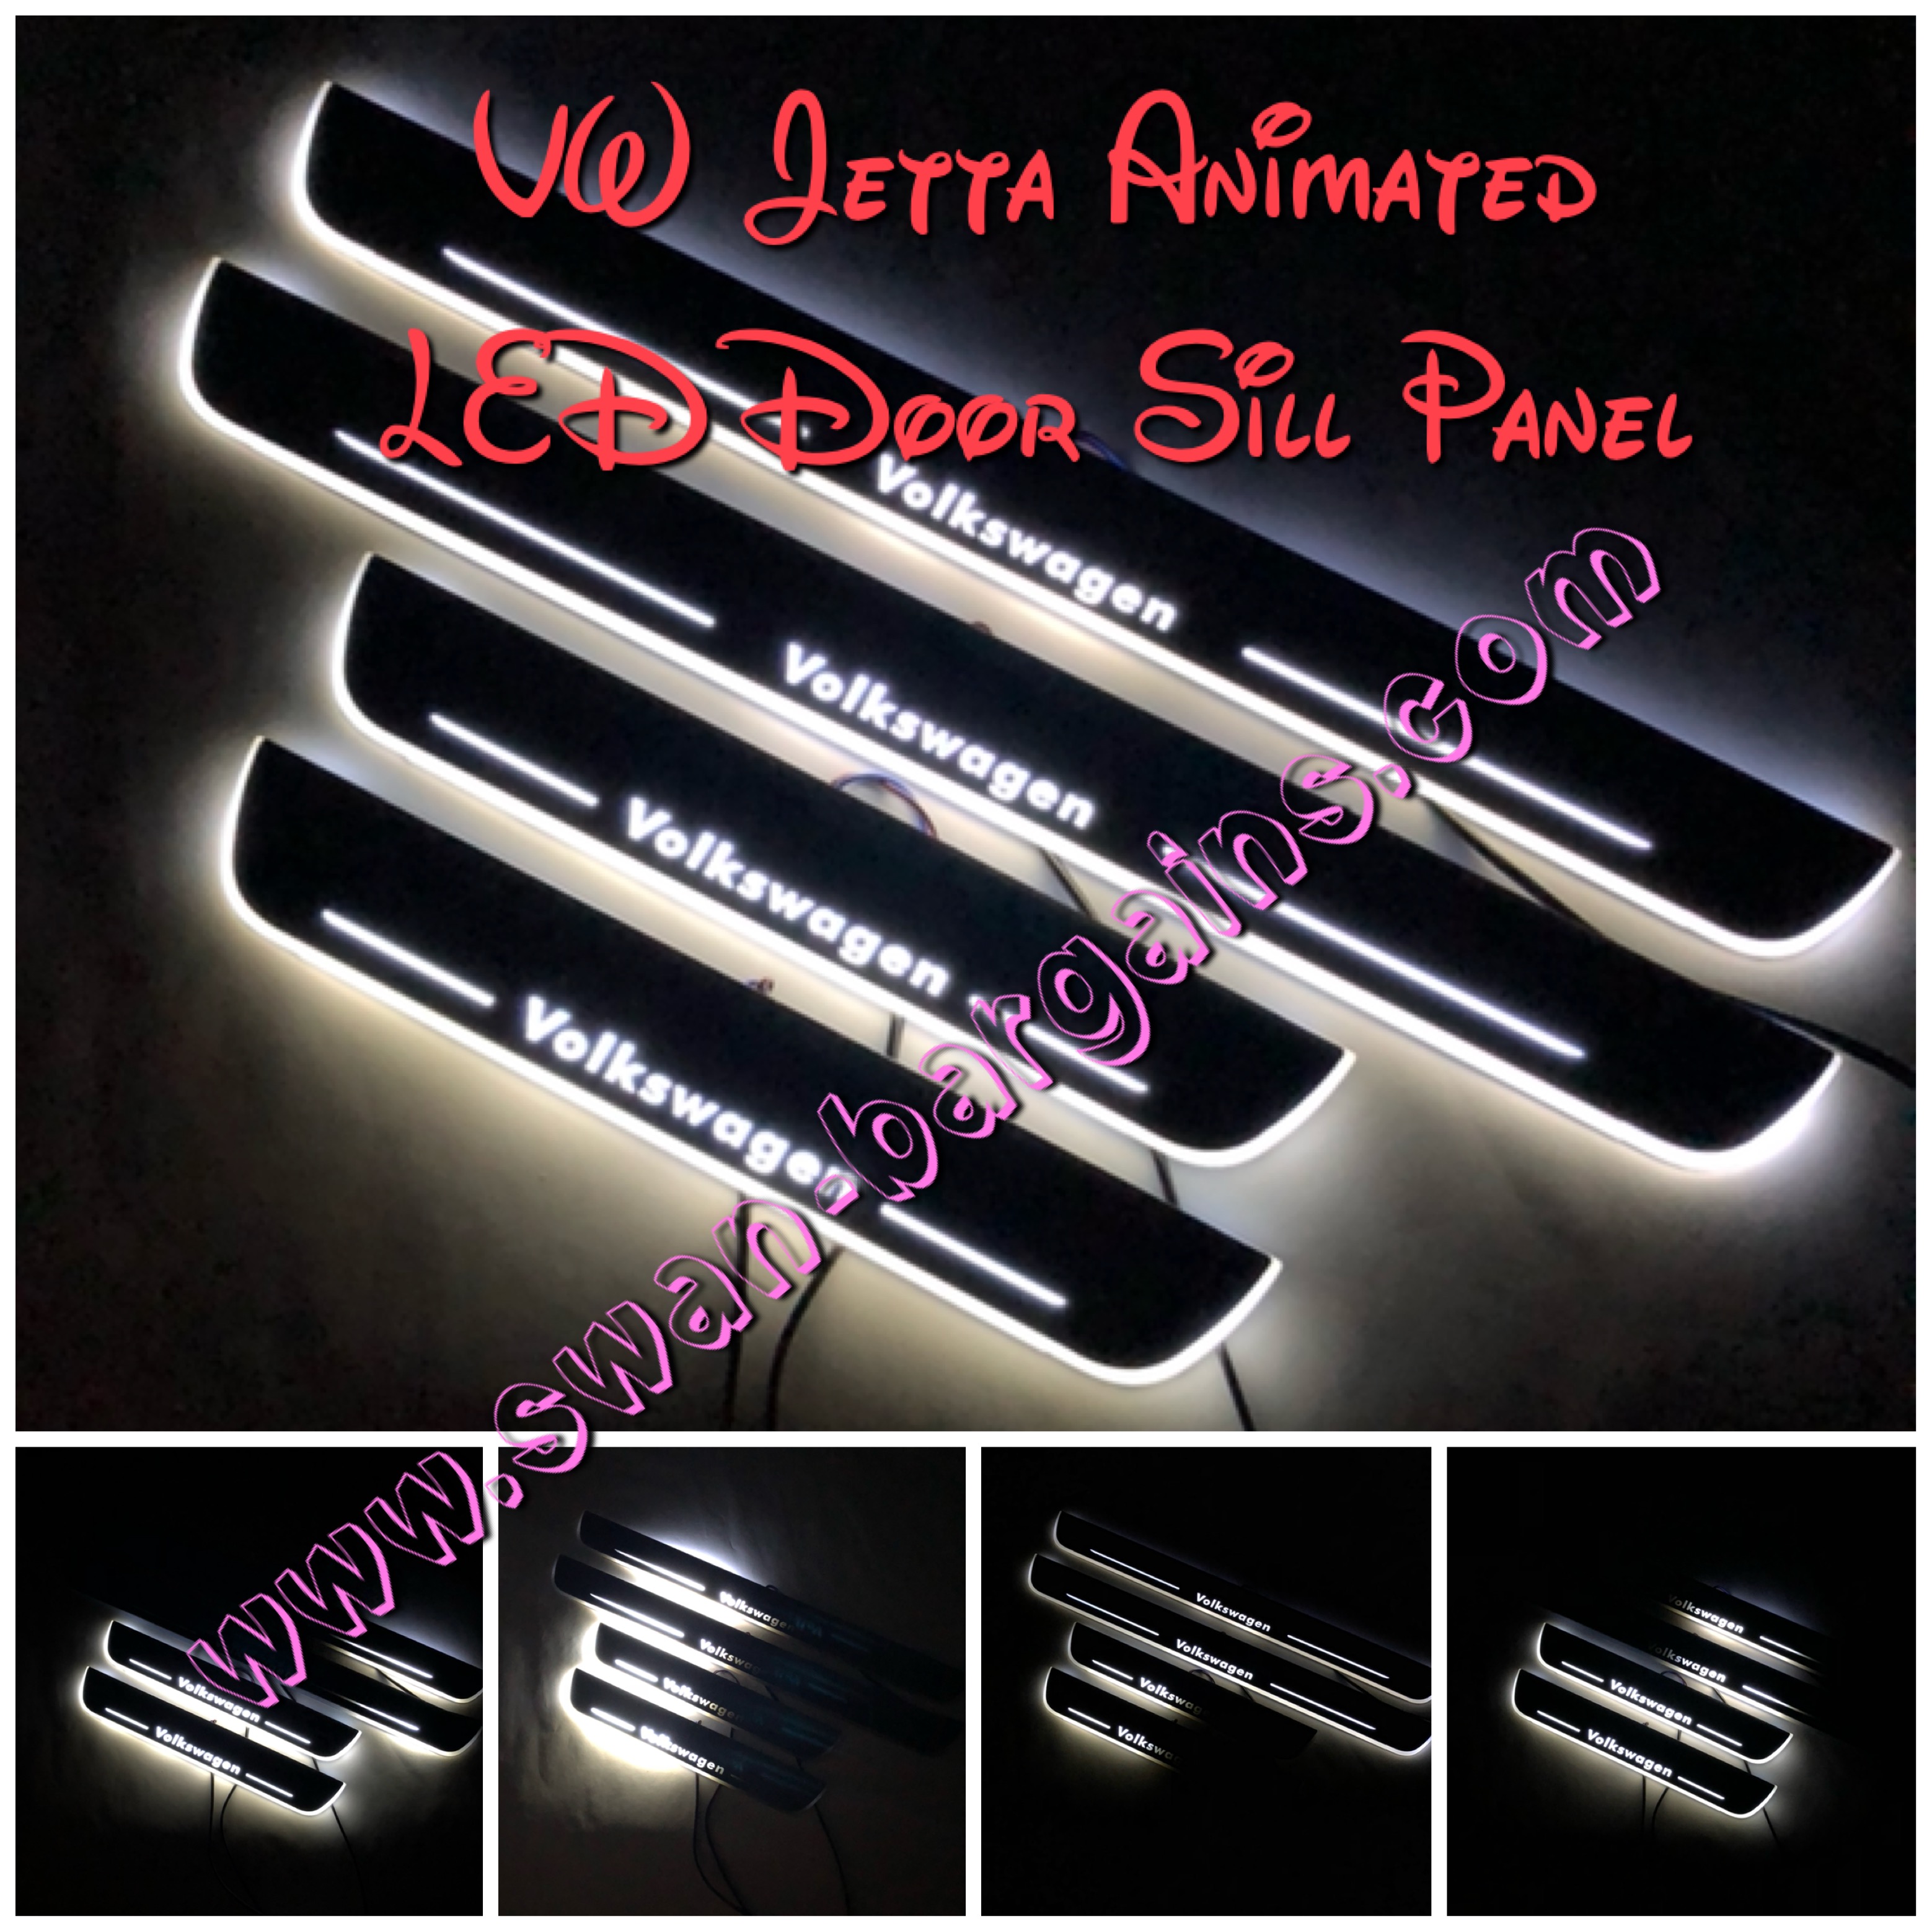 Volkswagen Jetta Animated Door Sill LED Plates Singapore - White